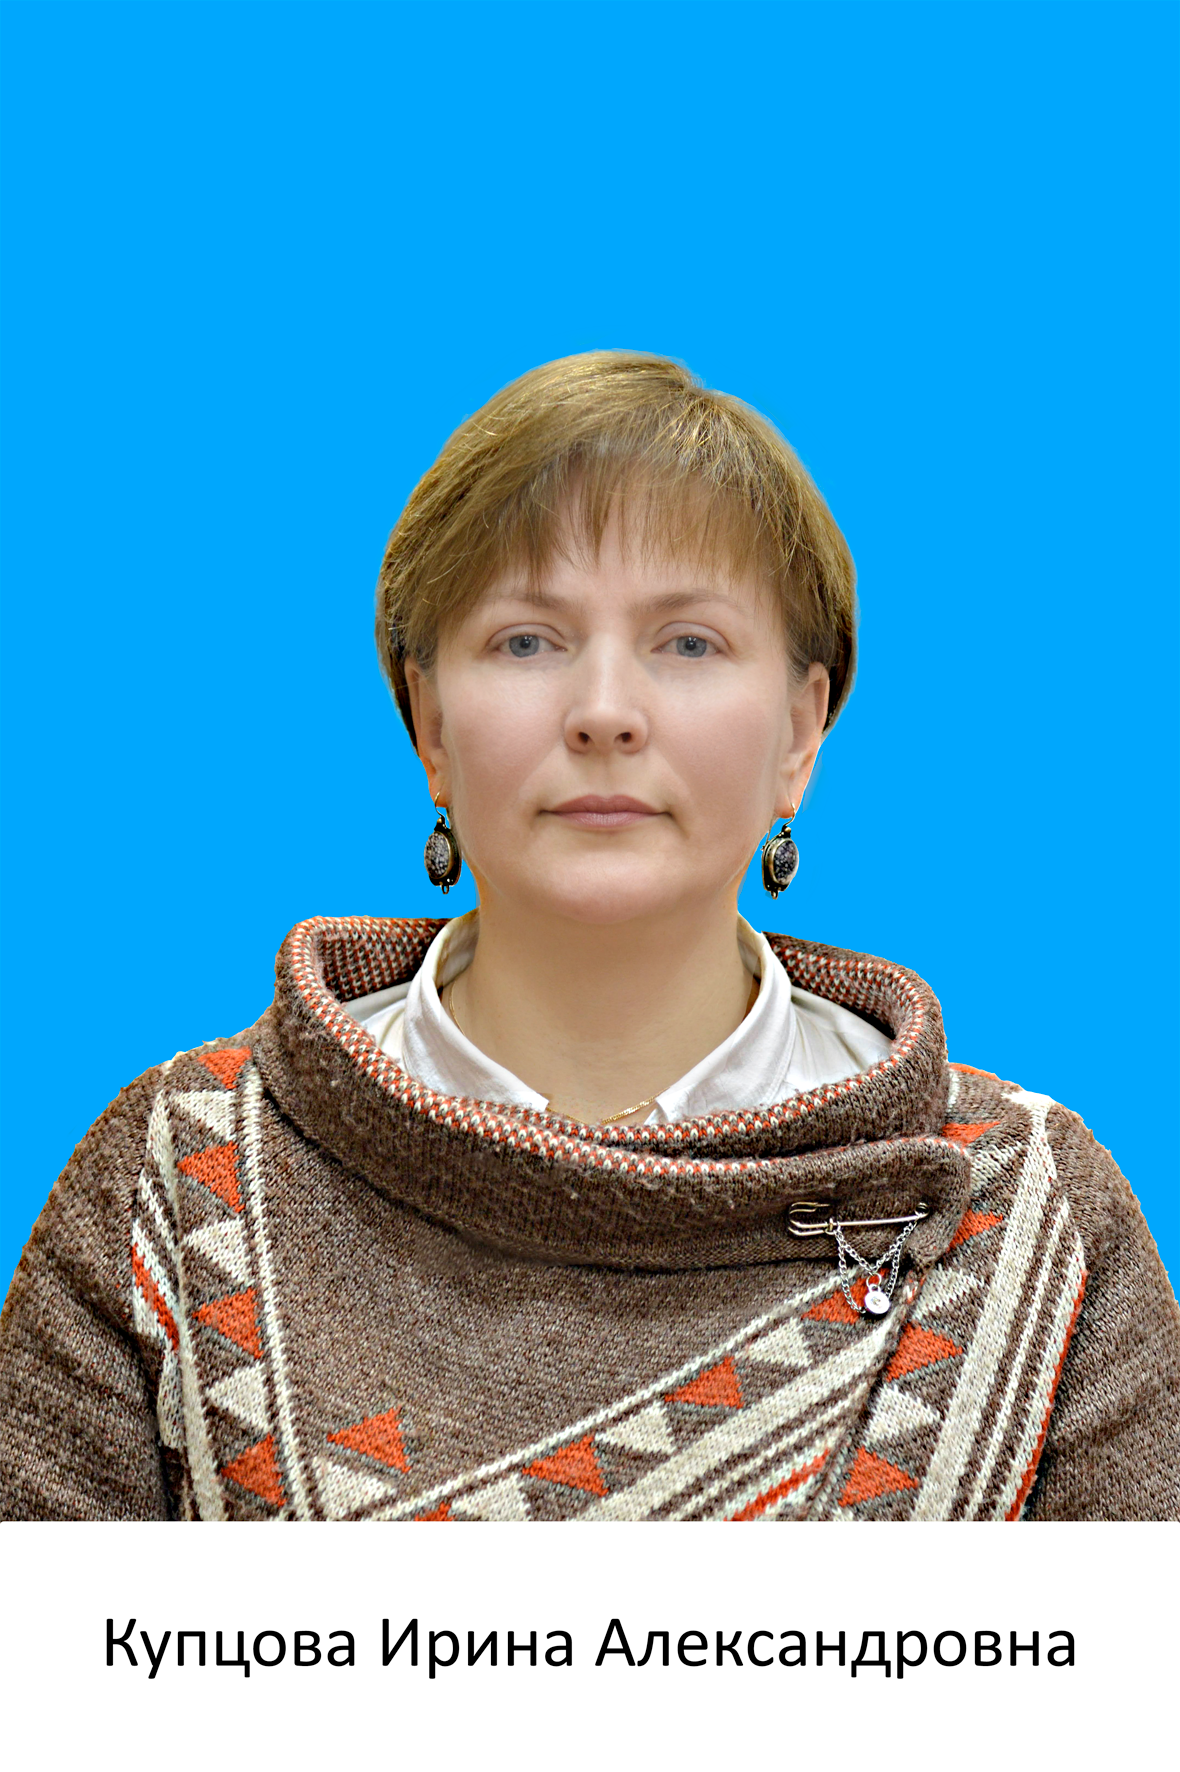 Купцова Ирина Александровна.